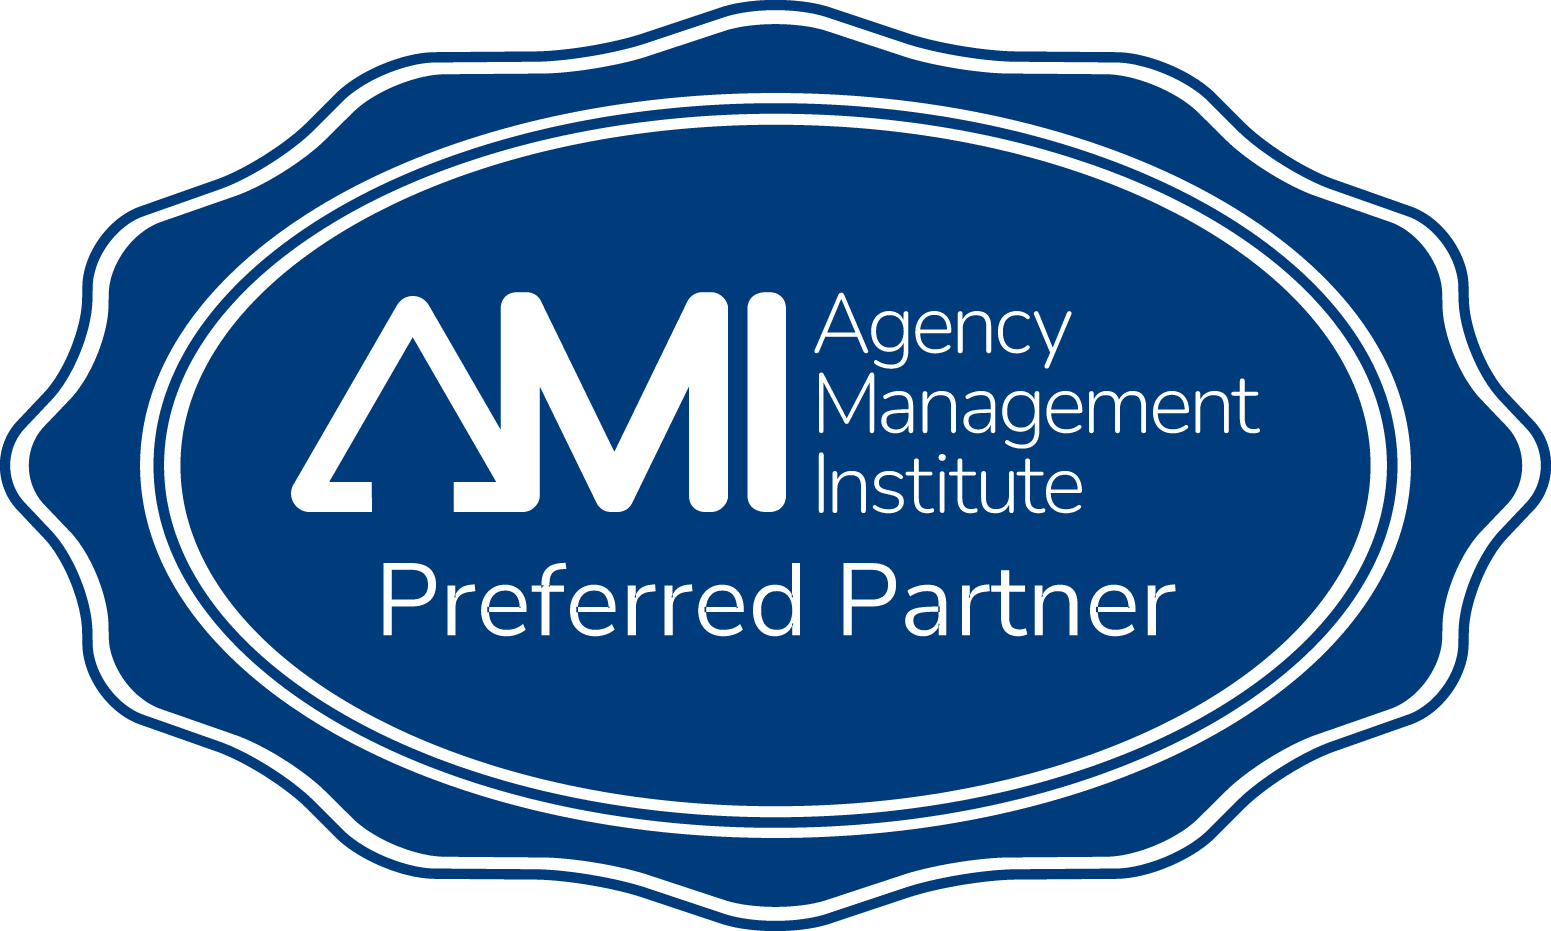 AMI - Agency Management Institute